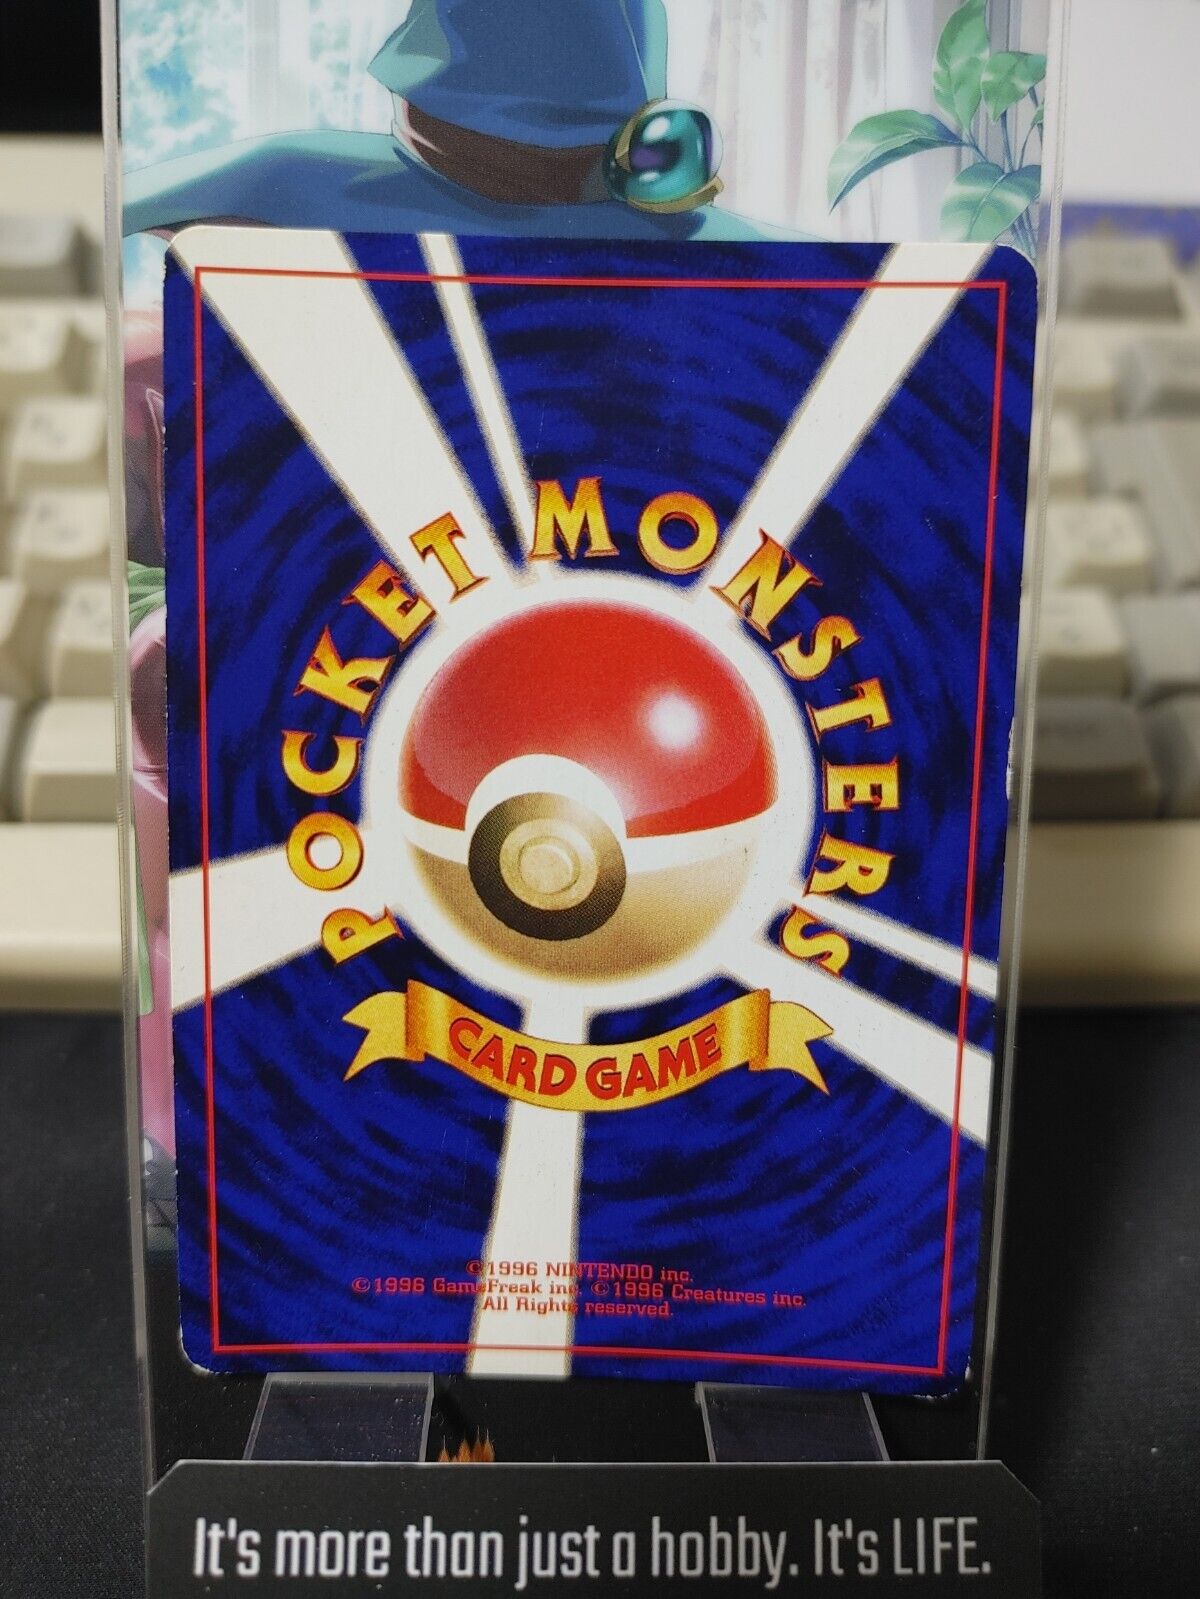 Shining Mew Corocoro Promo Holo 151 Japanese Pokemon Card Japan SUPER RARE!!